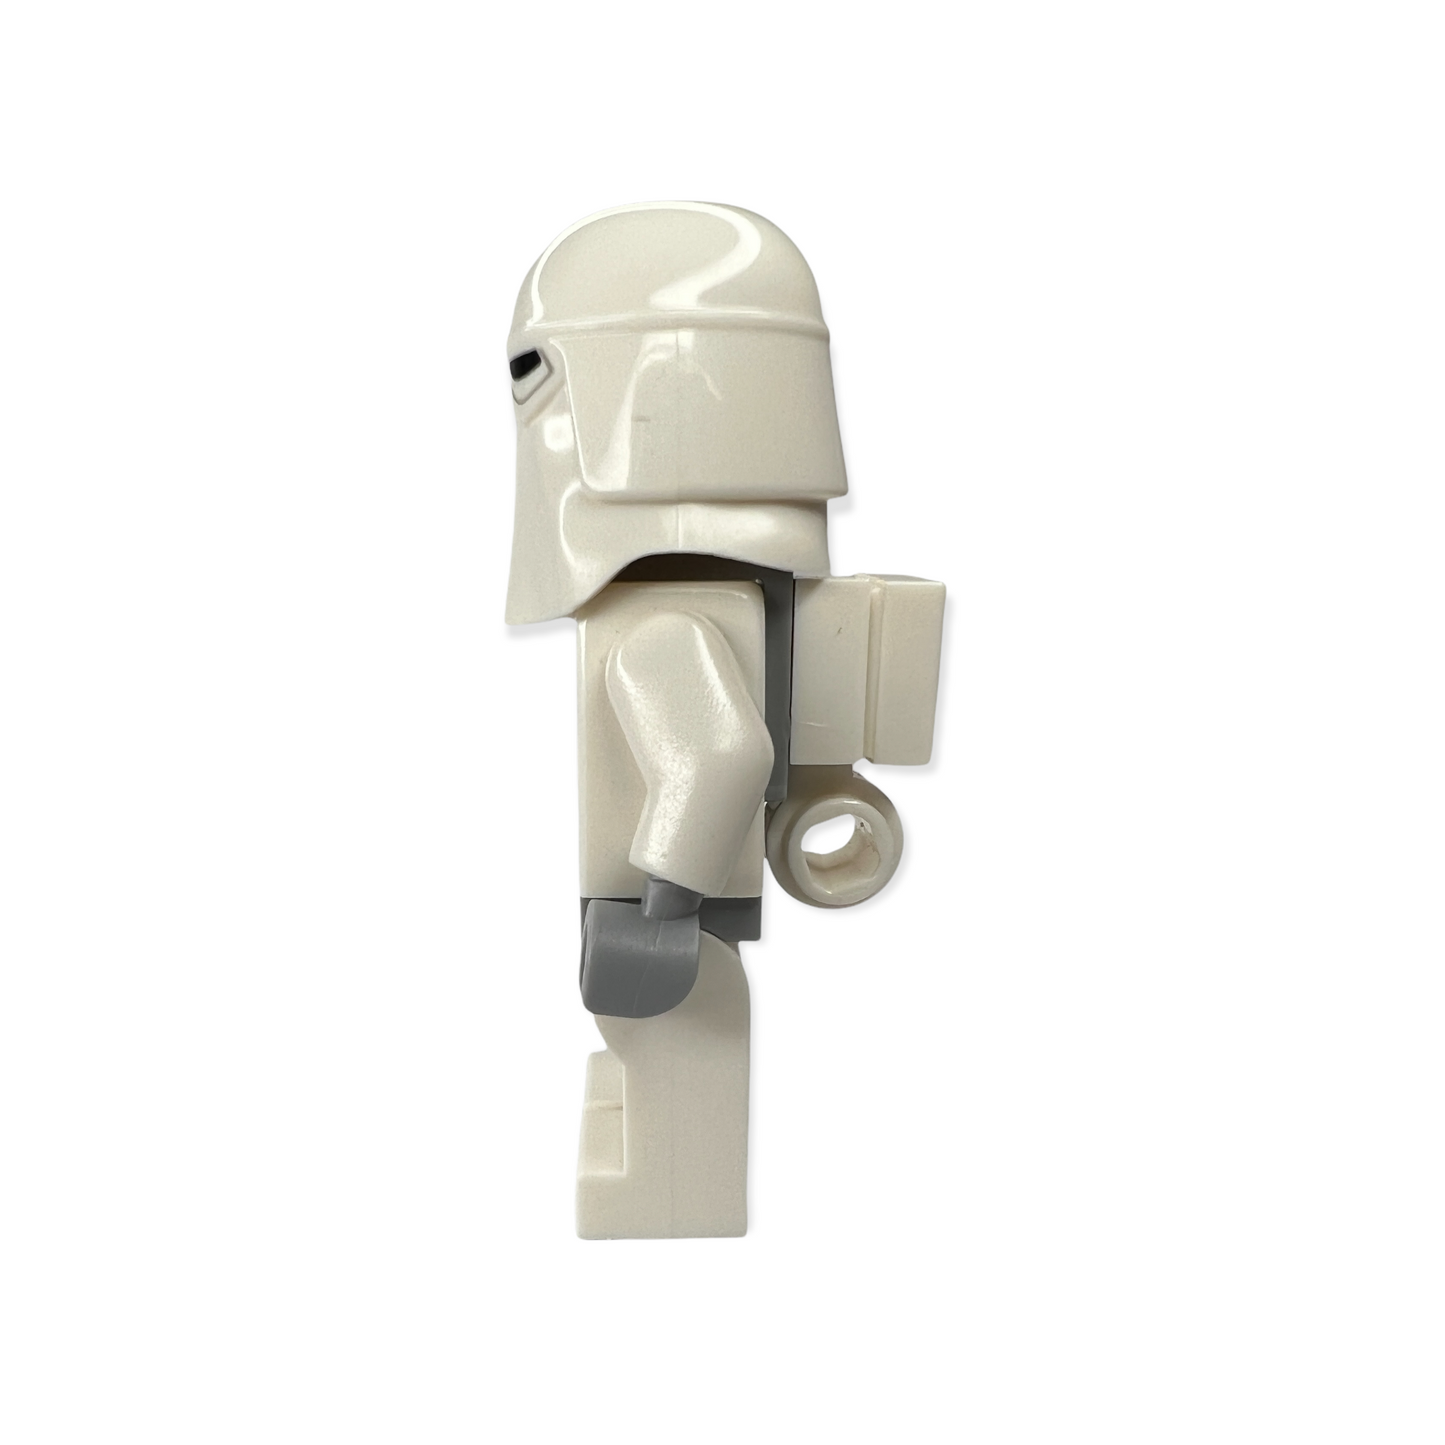 LEGO Minifigur sw0568 - Snowtrooper